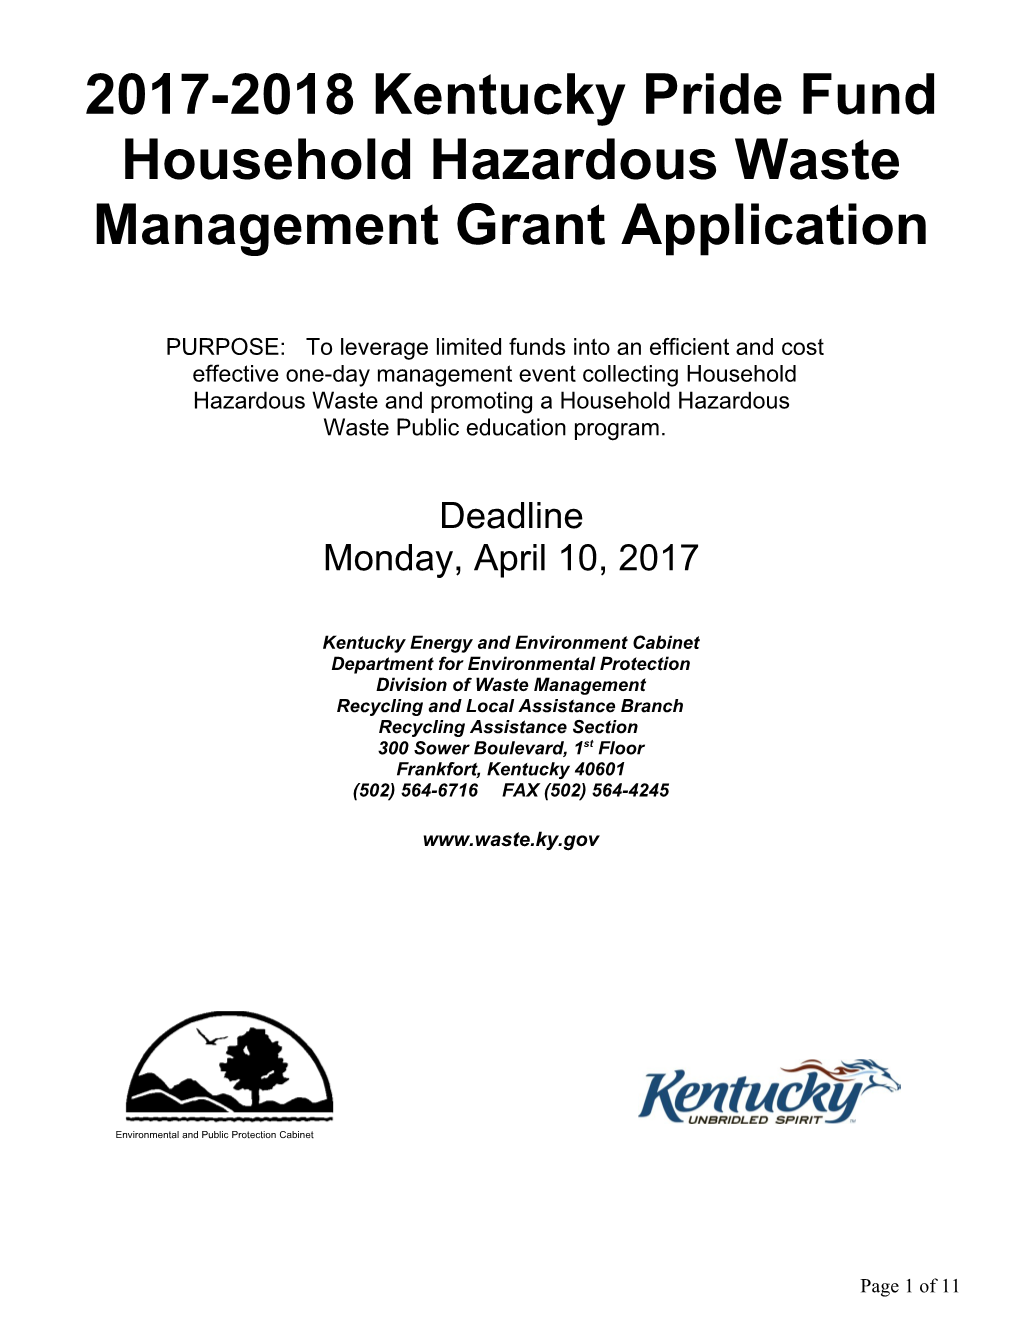 Household Hazardous Waste Management Grant Application